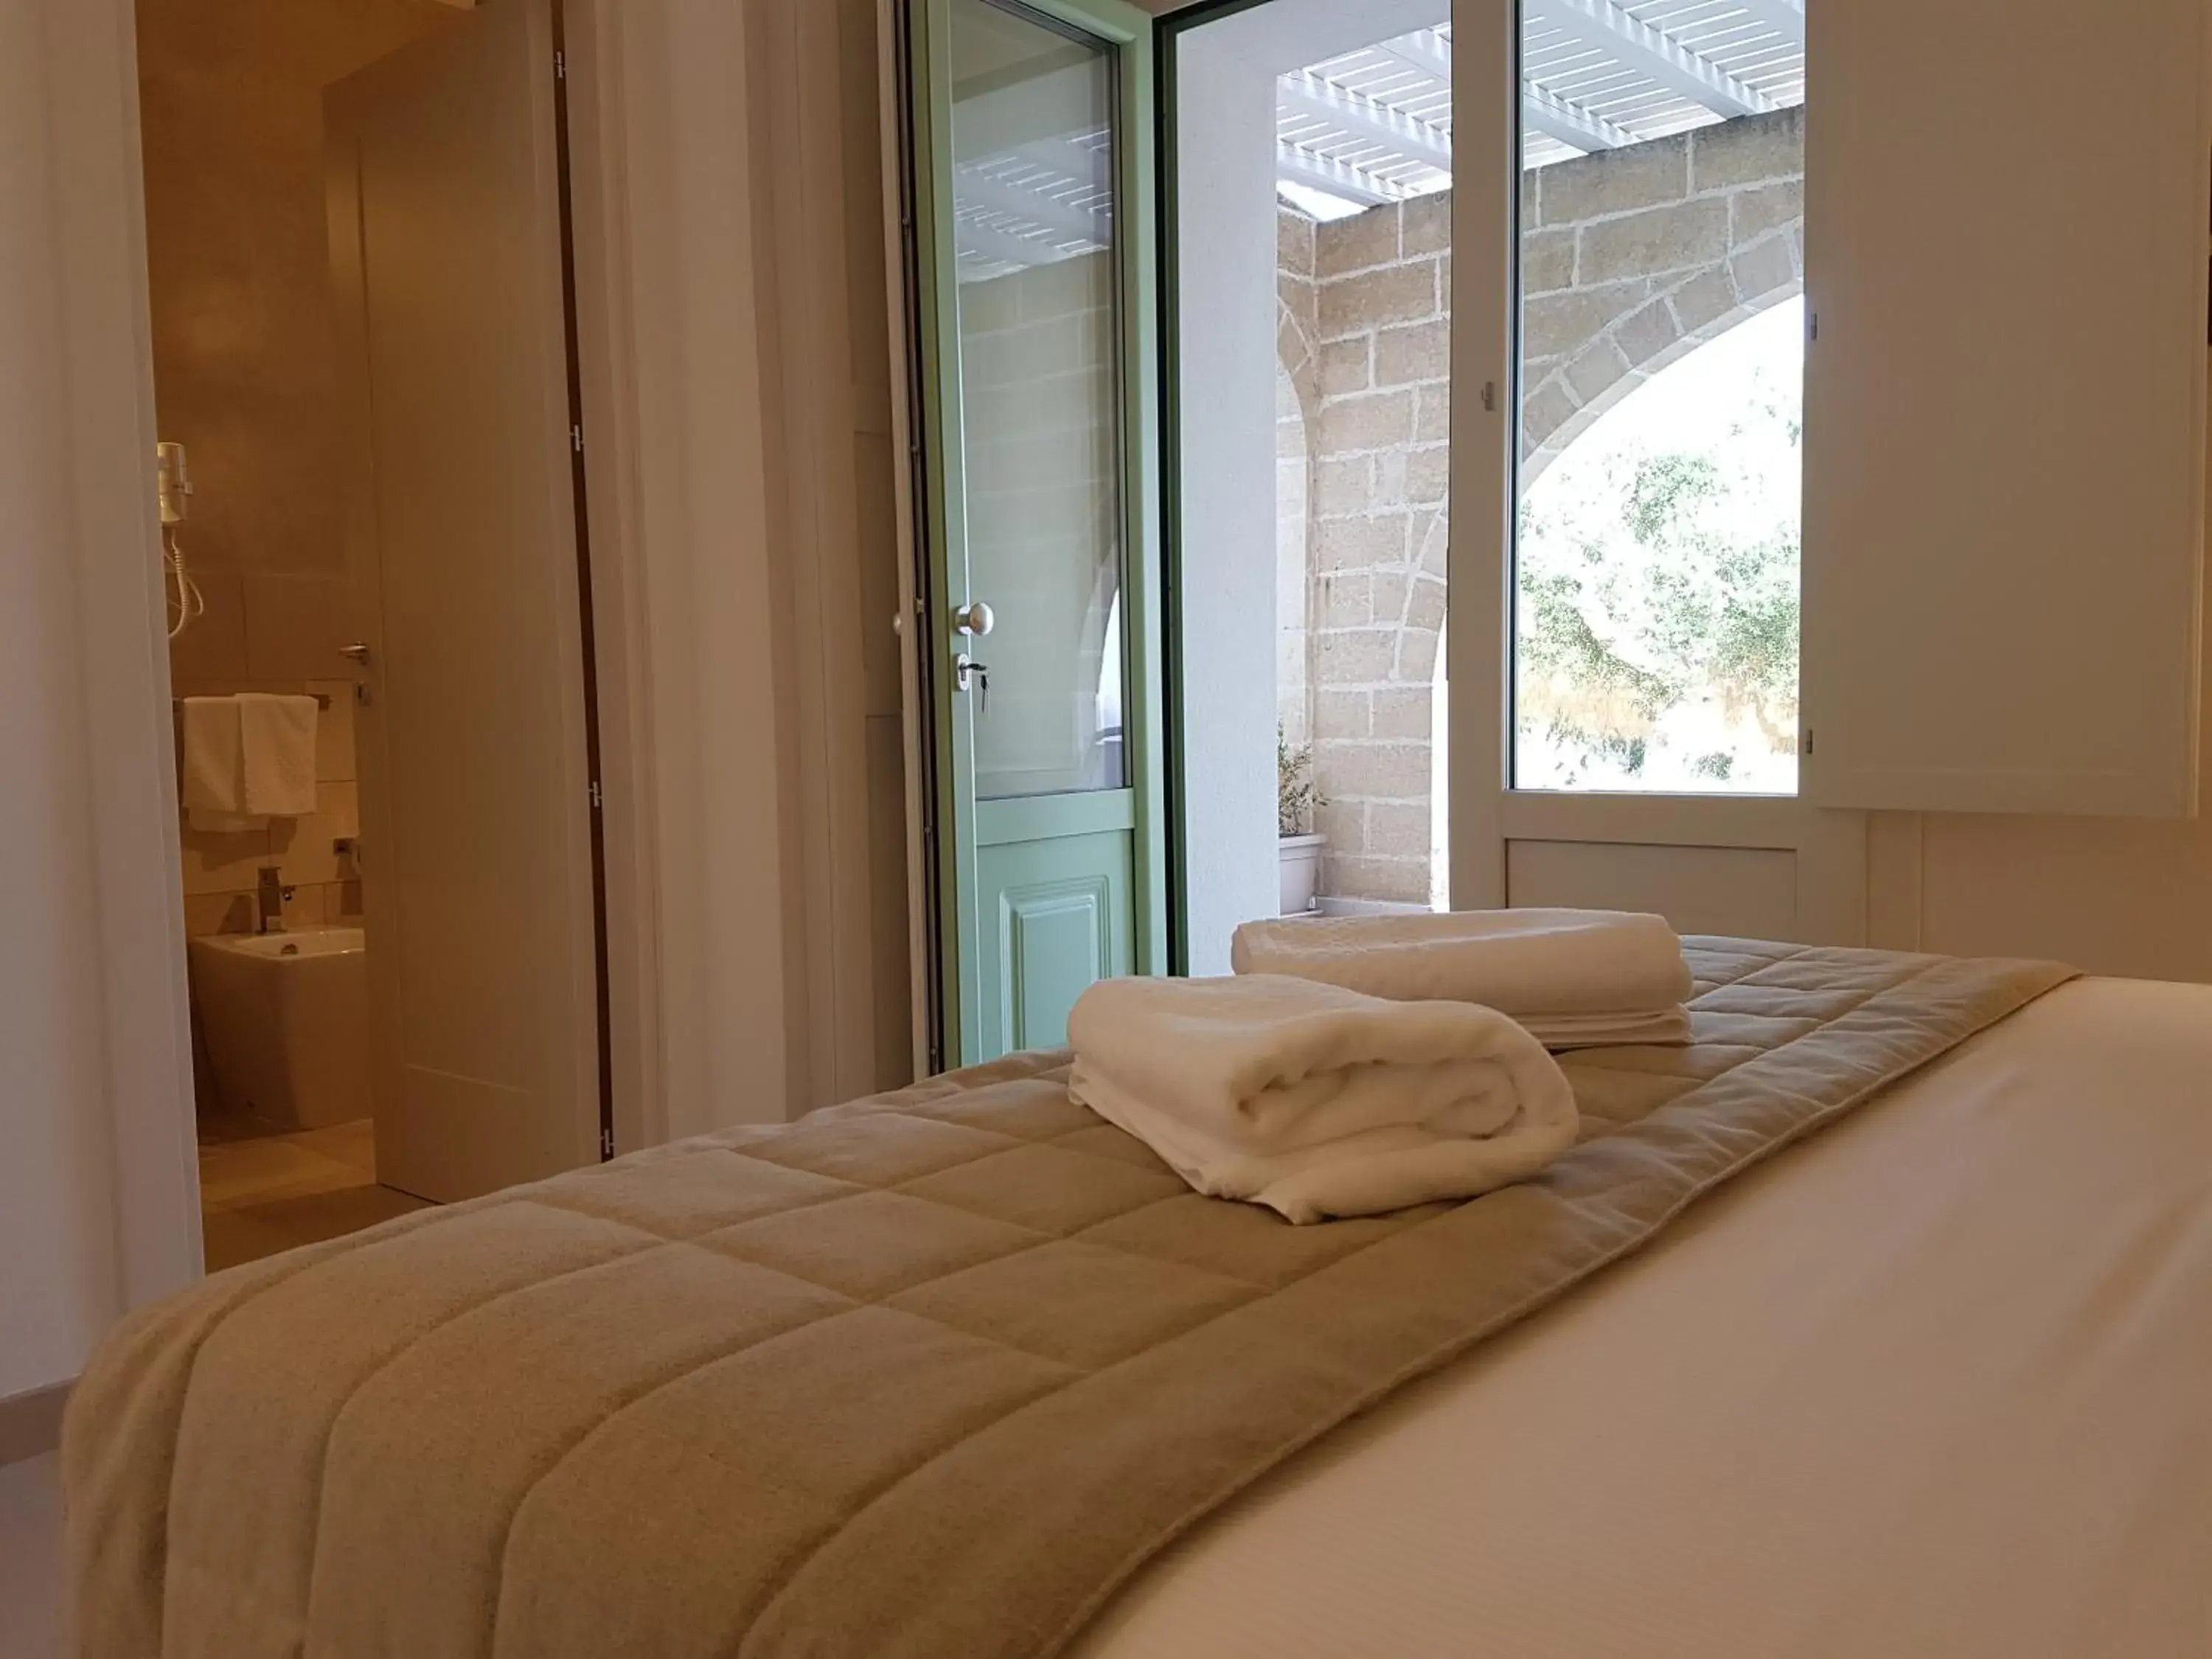 Bed, Room Photo in Montiro' Hotel